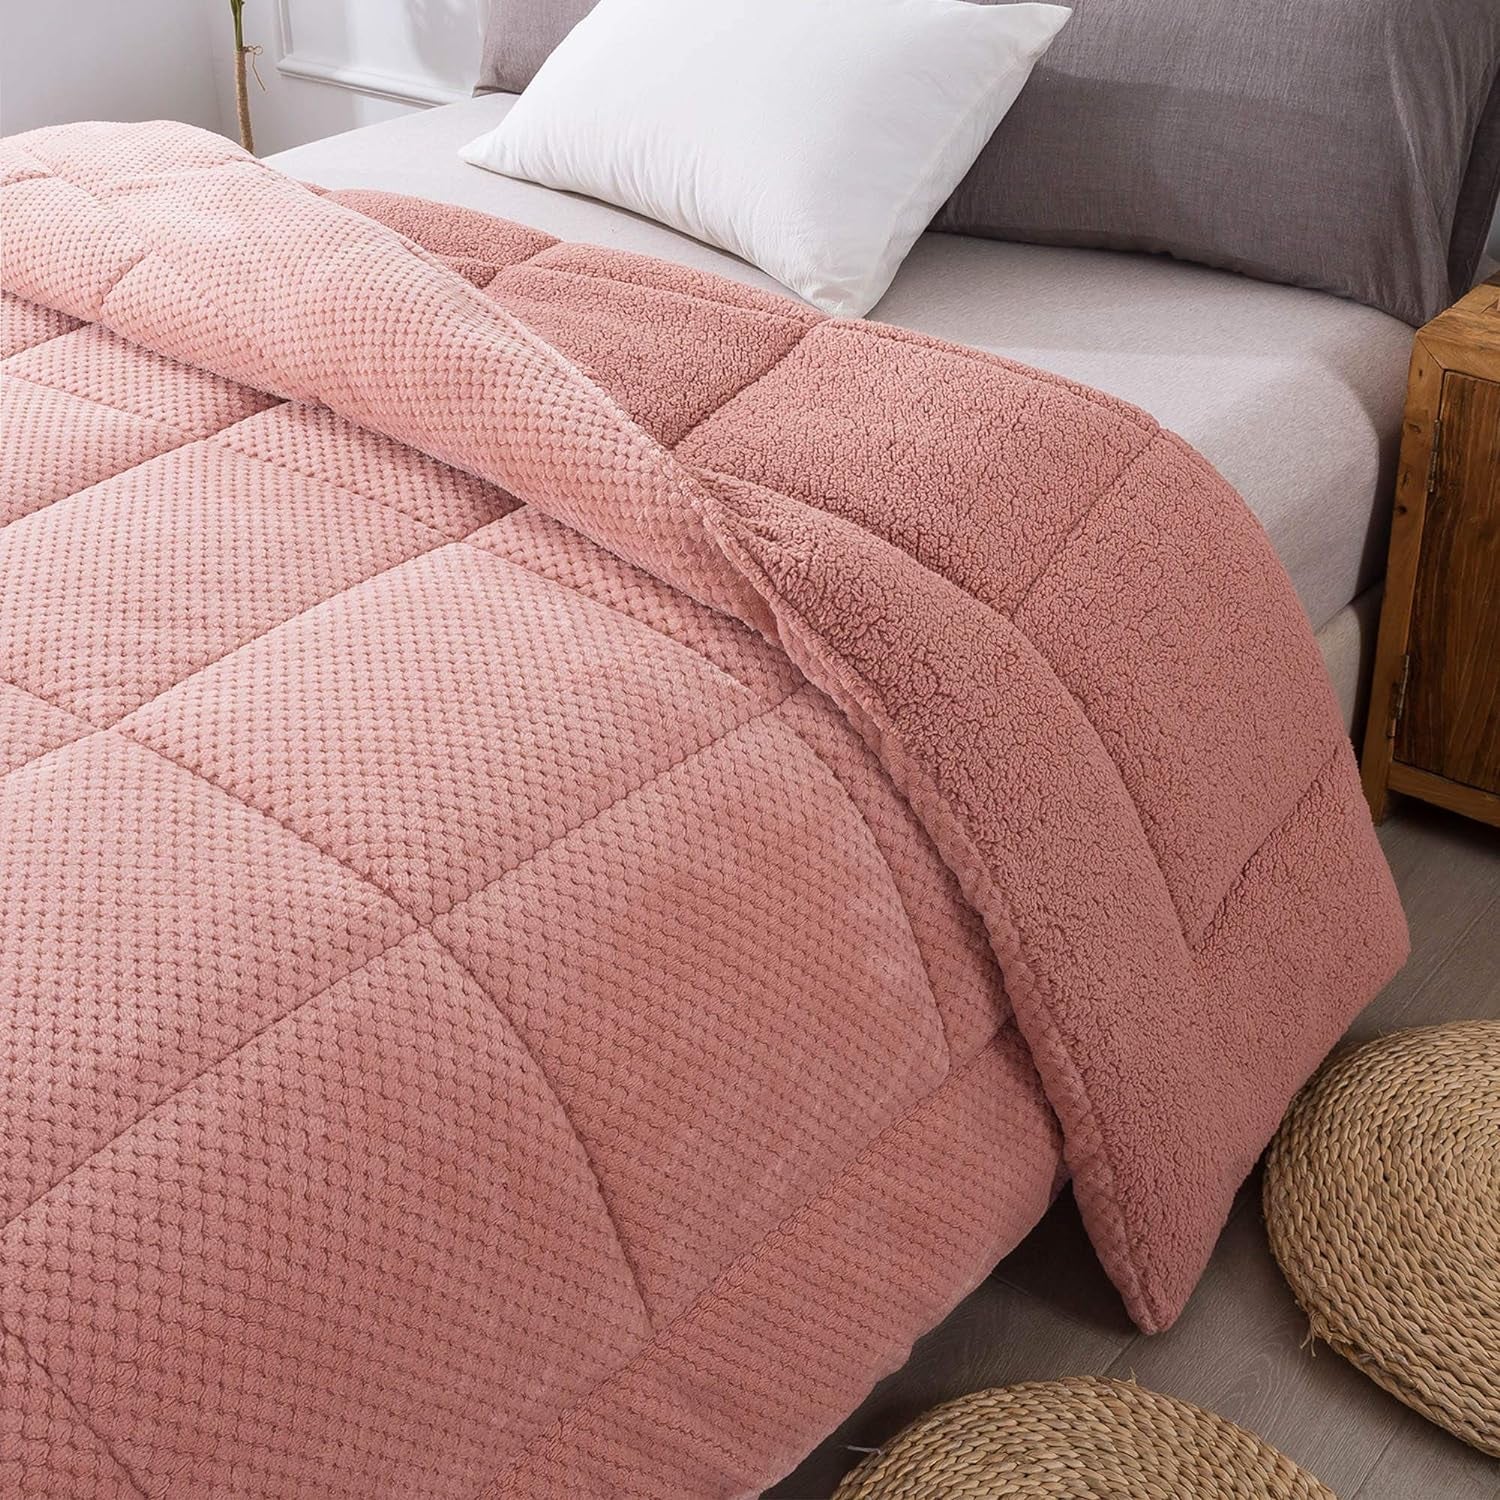 Luxury Plush Sherpa Comforter, Ultra Soft Cozy Reversible Fleece - Goose down Alternative Fill, Machine Washable Bedding, Sunset Rose, King Size